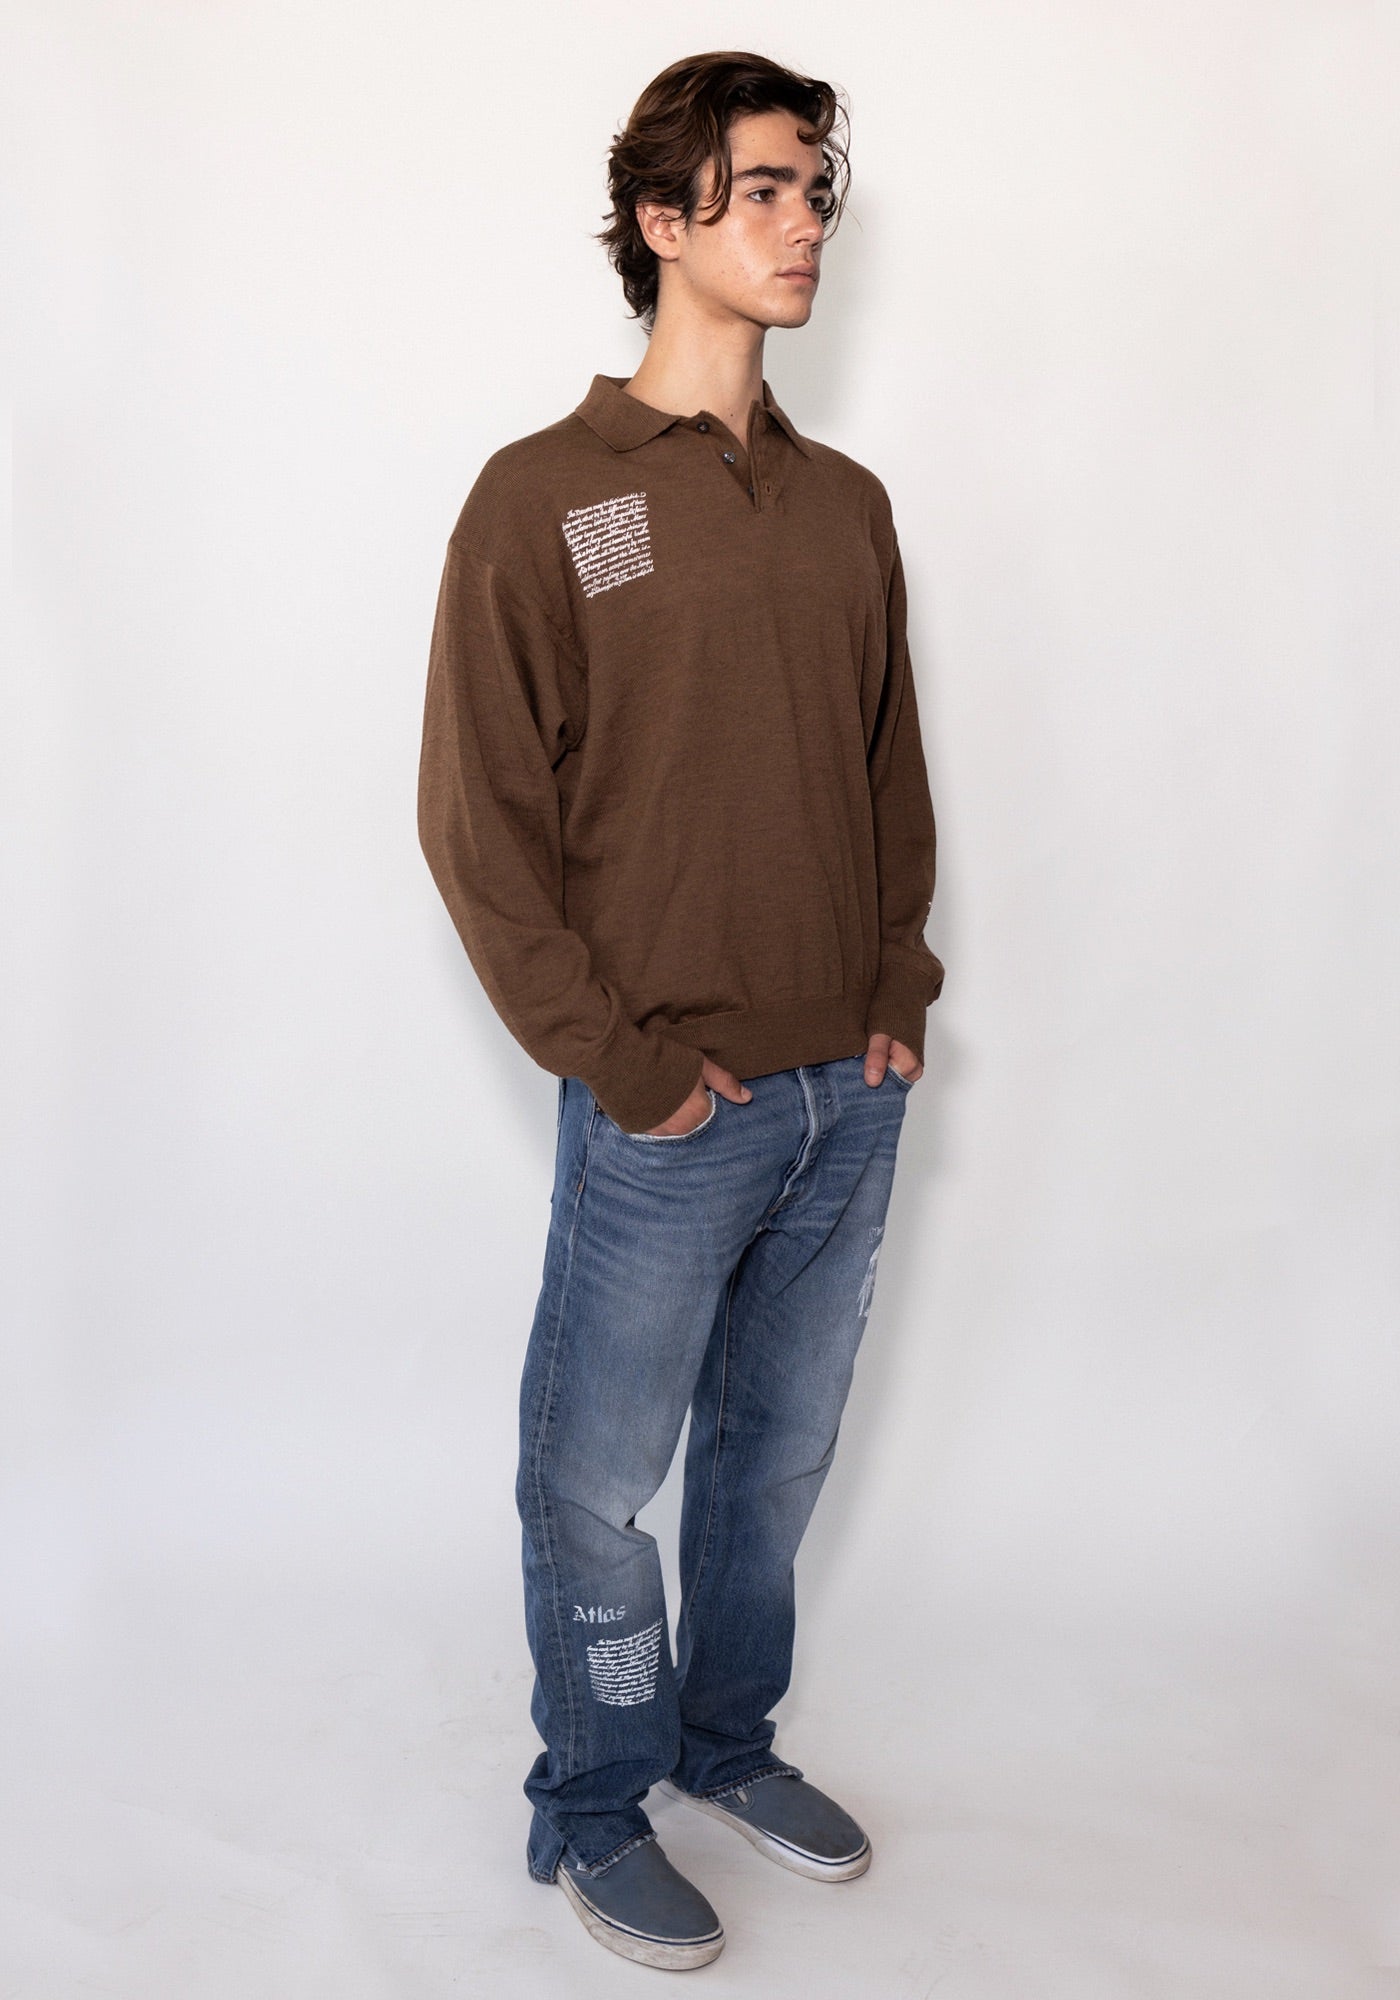 Vermont Rust Brown Sweater